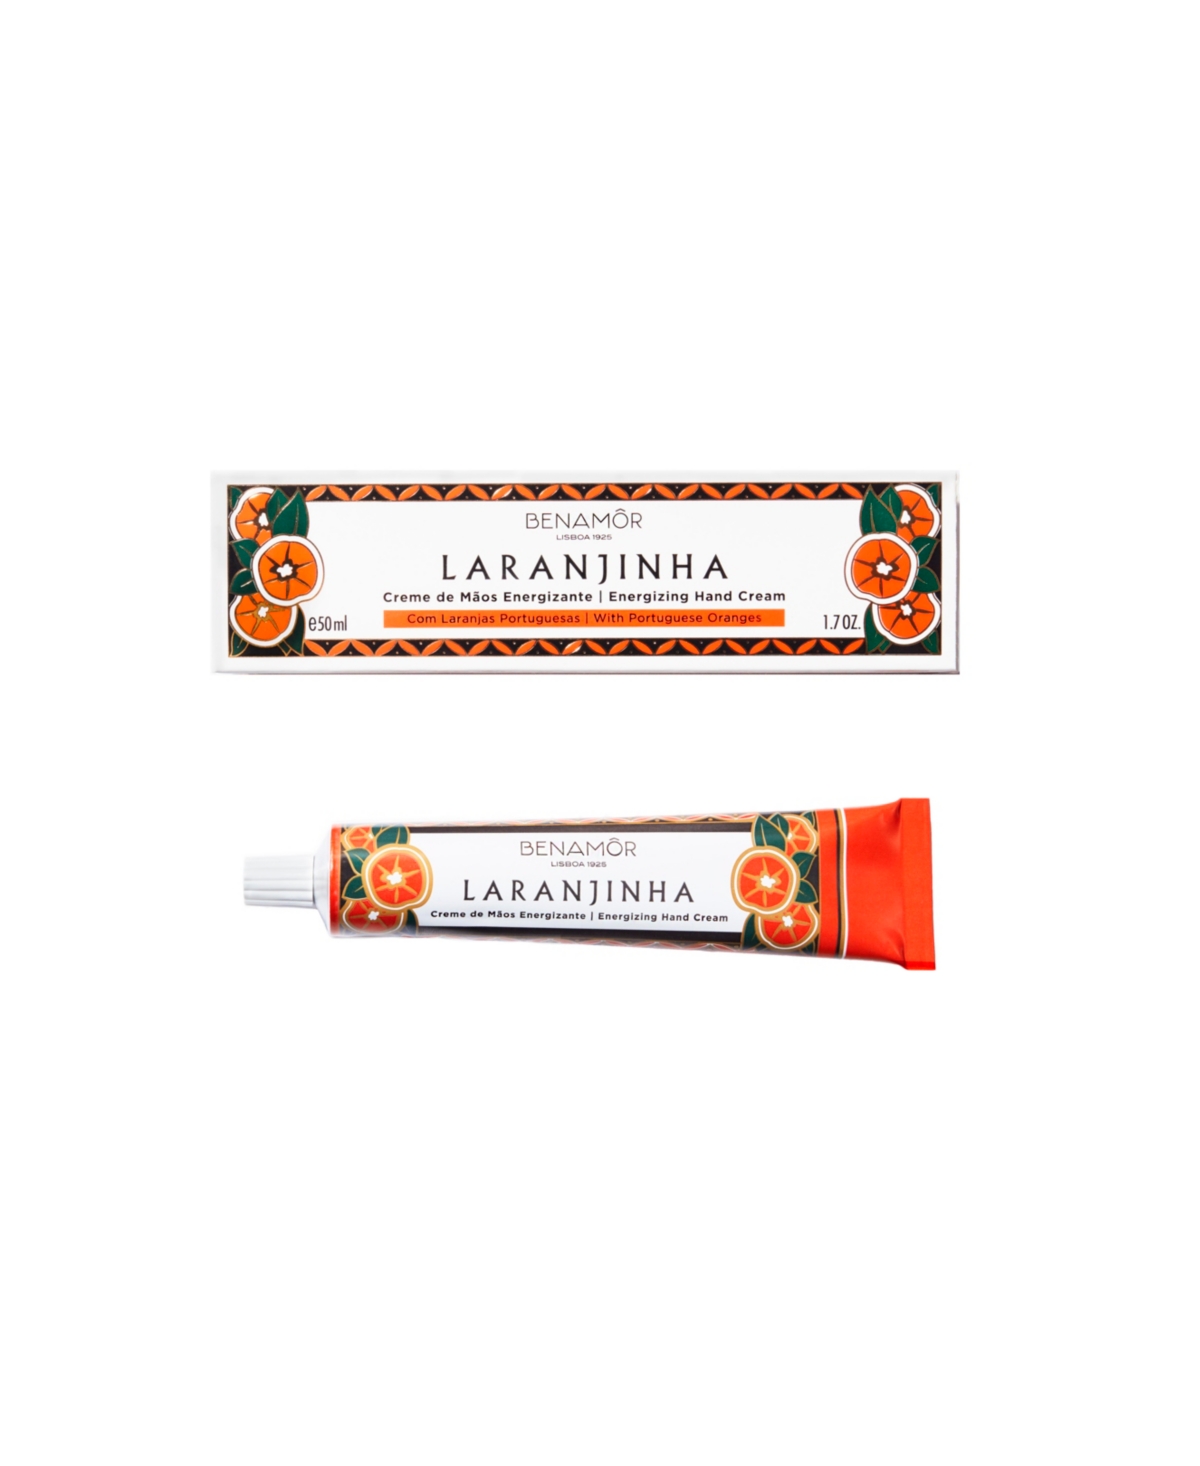 Women's Laranjinha Creme de Maos Energizante, Energizing Hand Cream, 1.69 fl oz